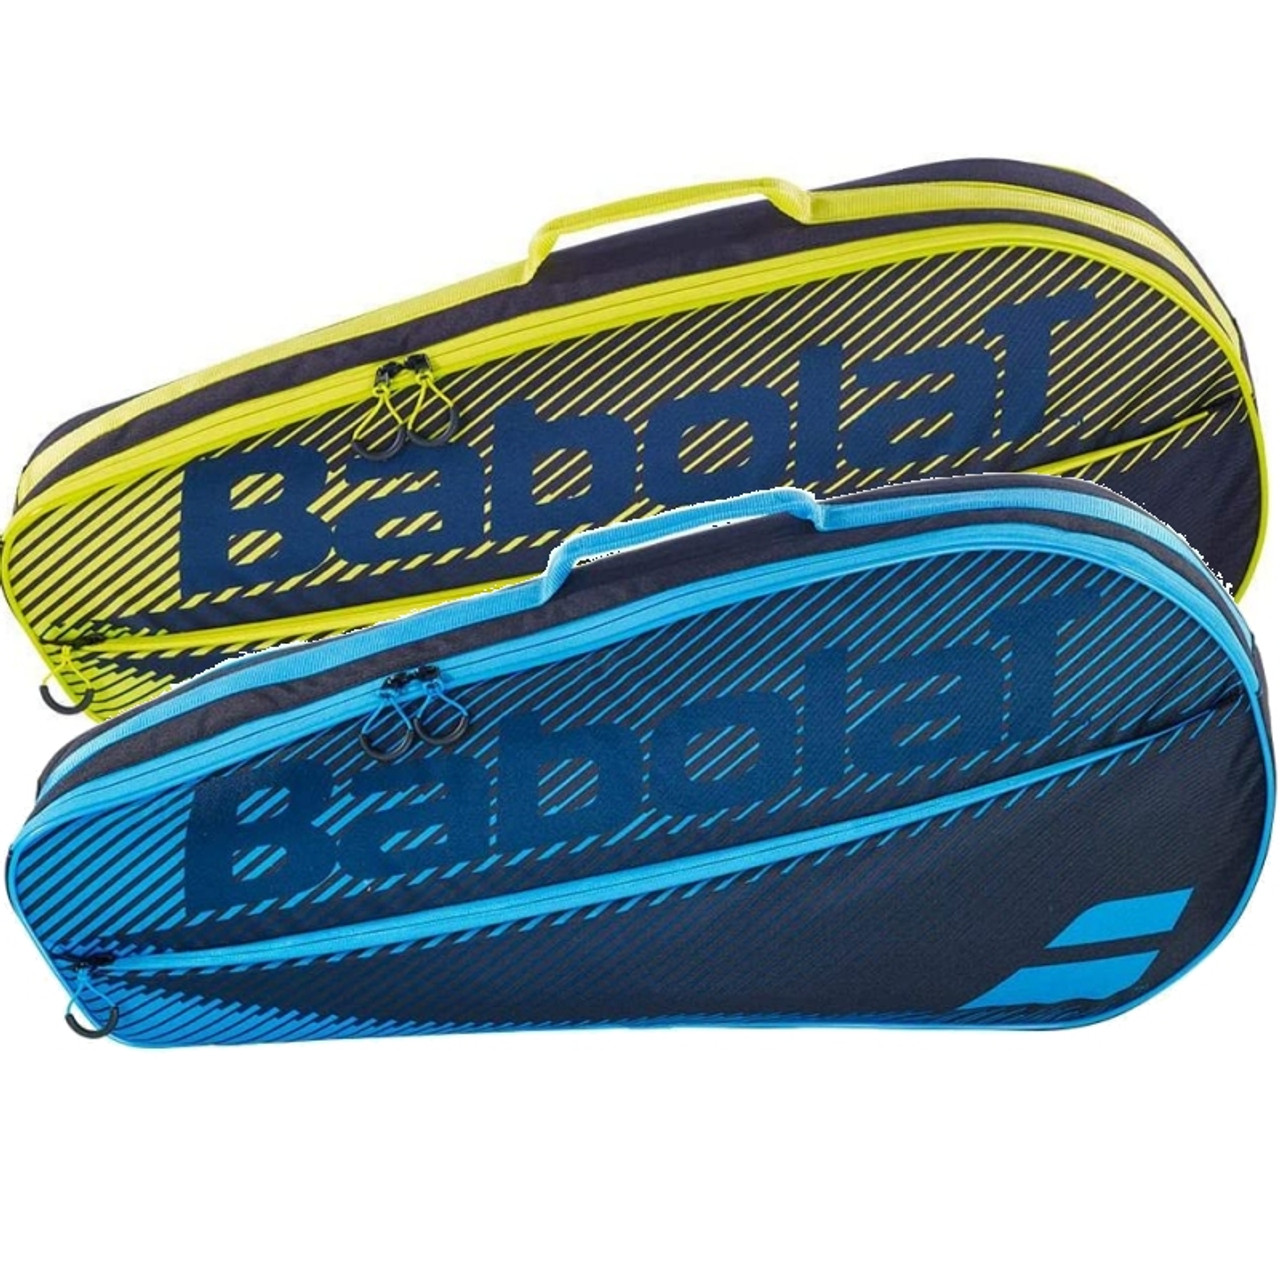 Babolat Racquet Holder 3 Tennis Bag, Black/Blue | Holiday Gift